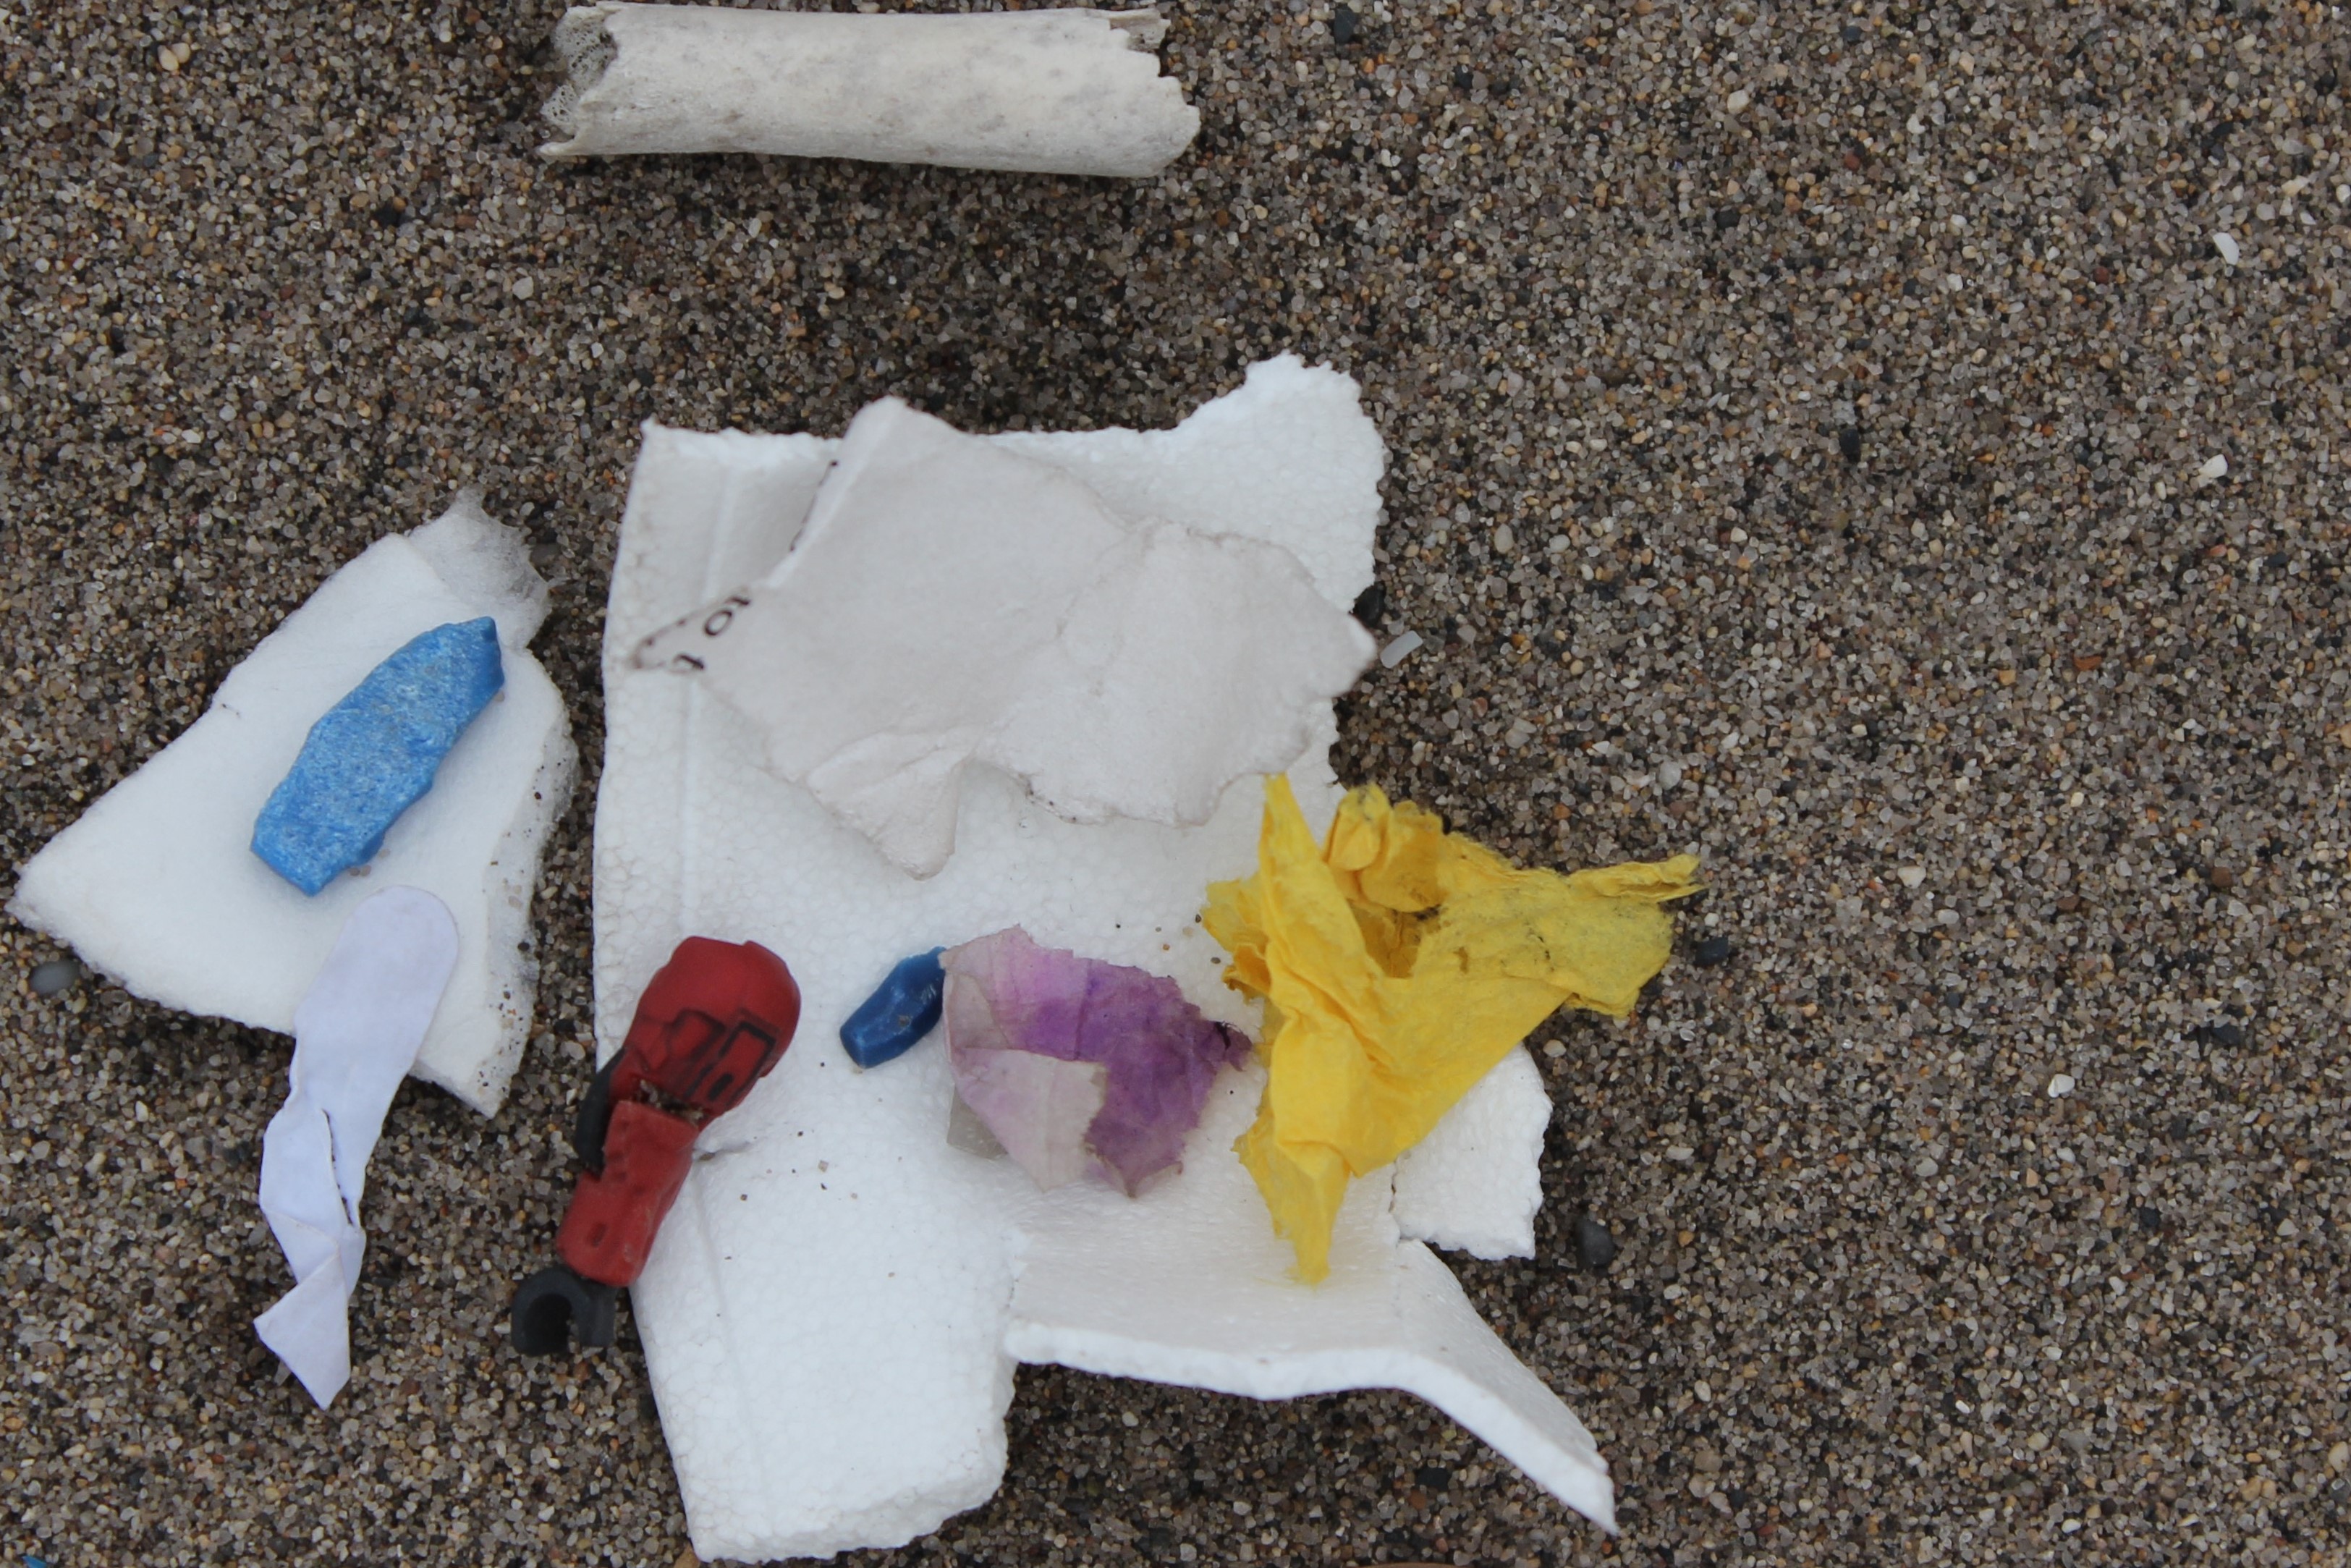 coastal clean up news2